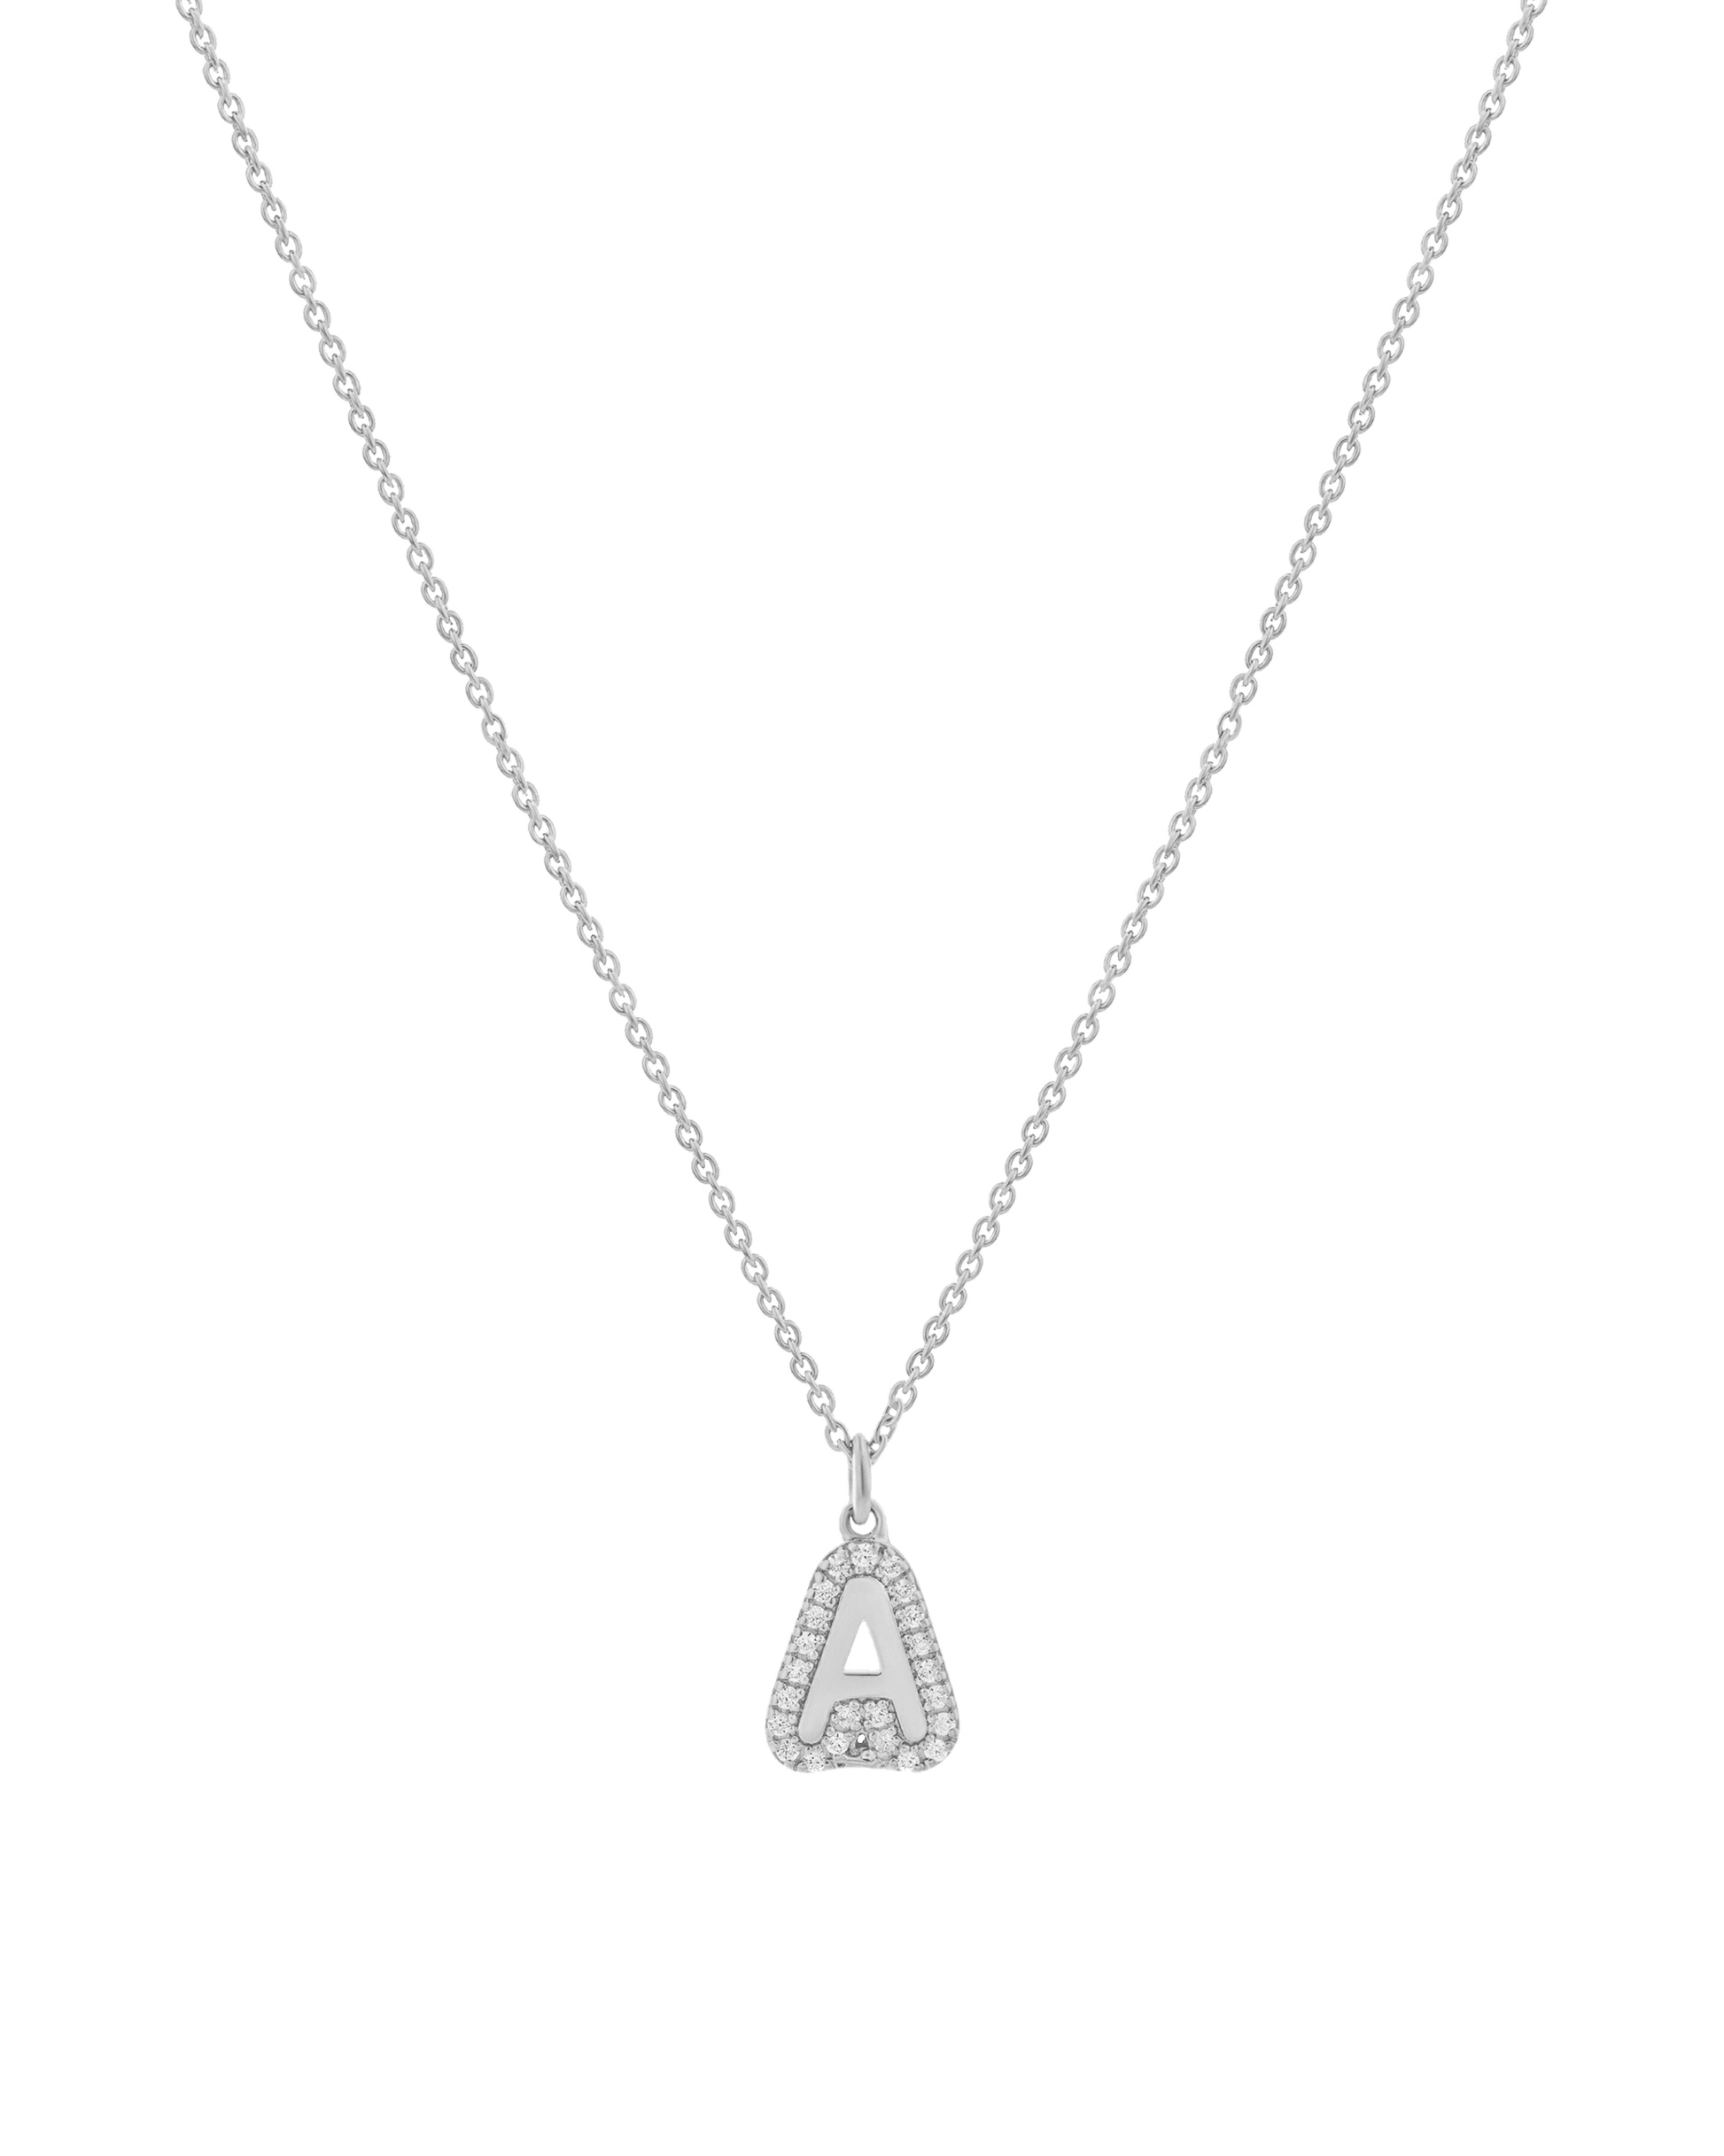 Diamond Bubble Initial Necklace - 14K White Gold Necklaces 14K Solid Gold Adjustable 16-17" (40cm-43cm) 